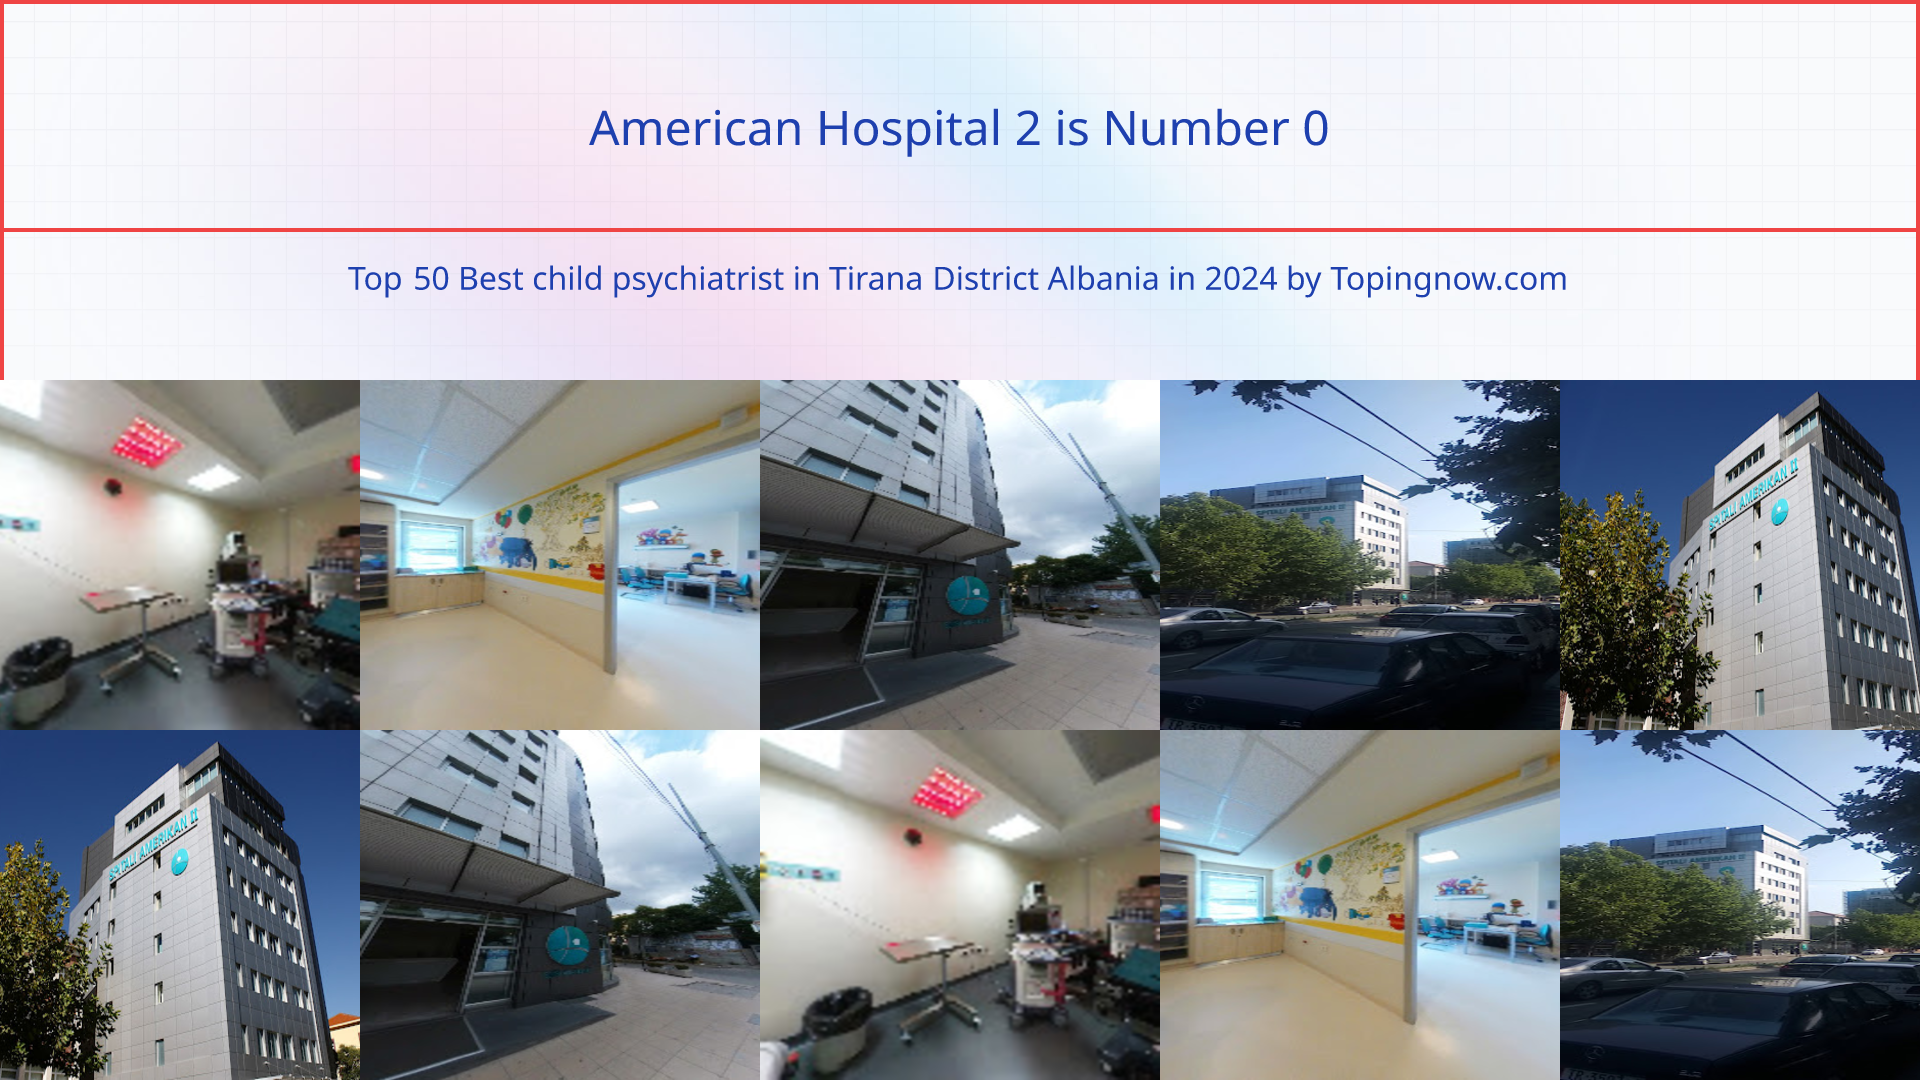 American Hospital 2: Top 50 Best child psychiatrist in Tirana District Albania in 2024